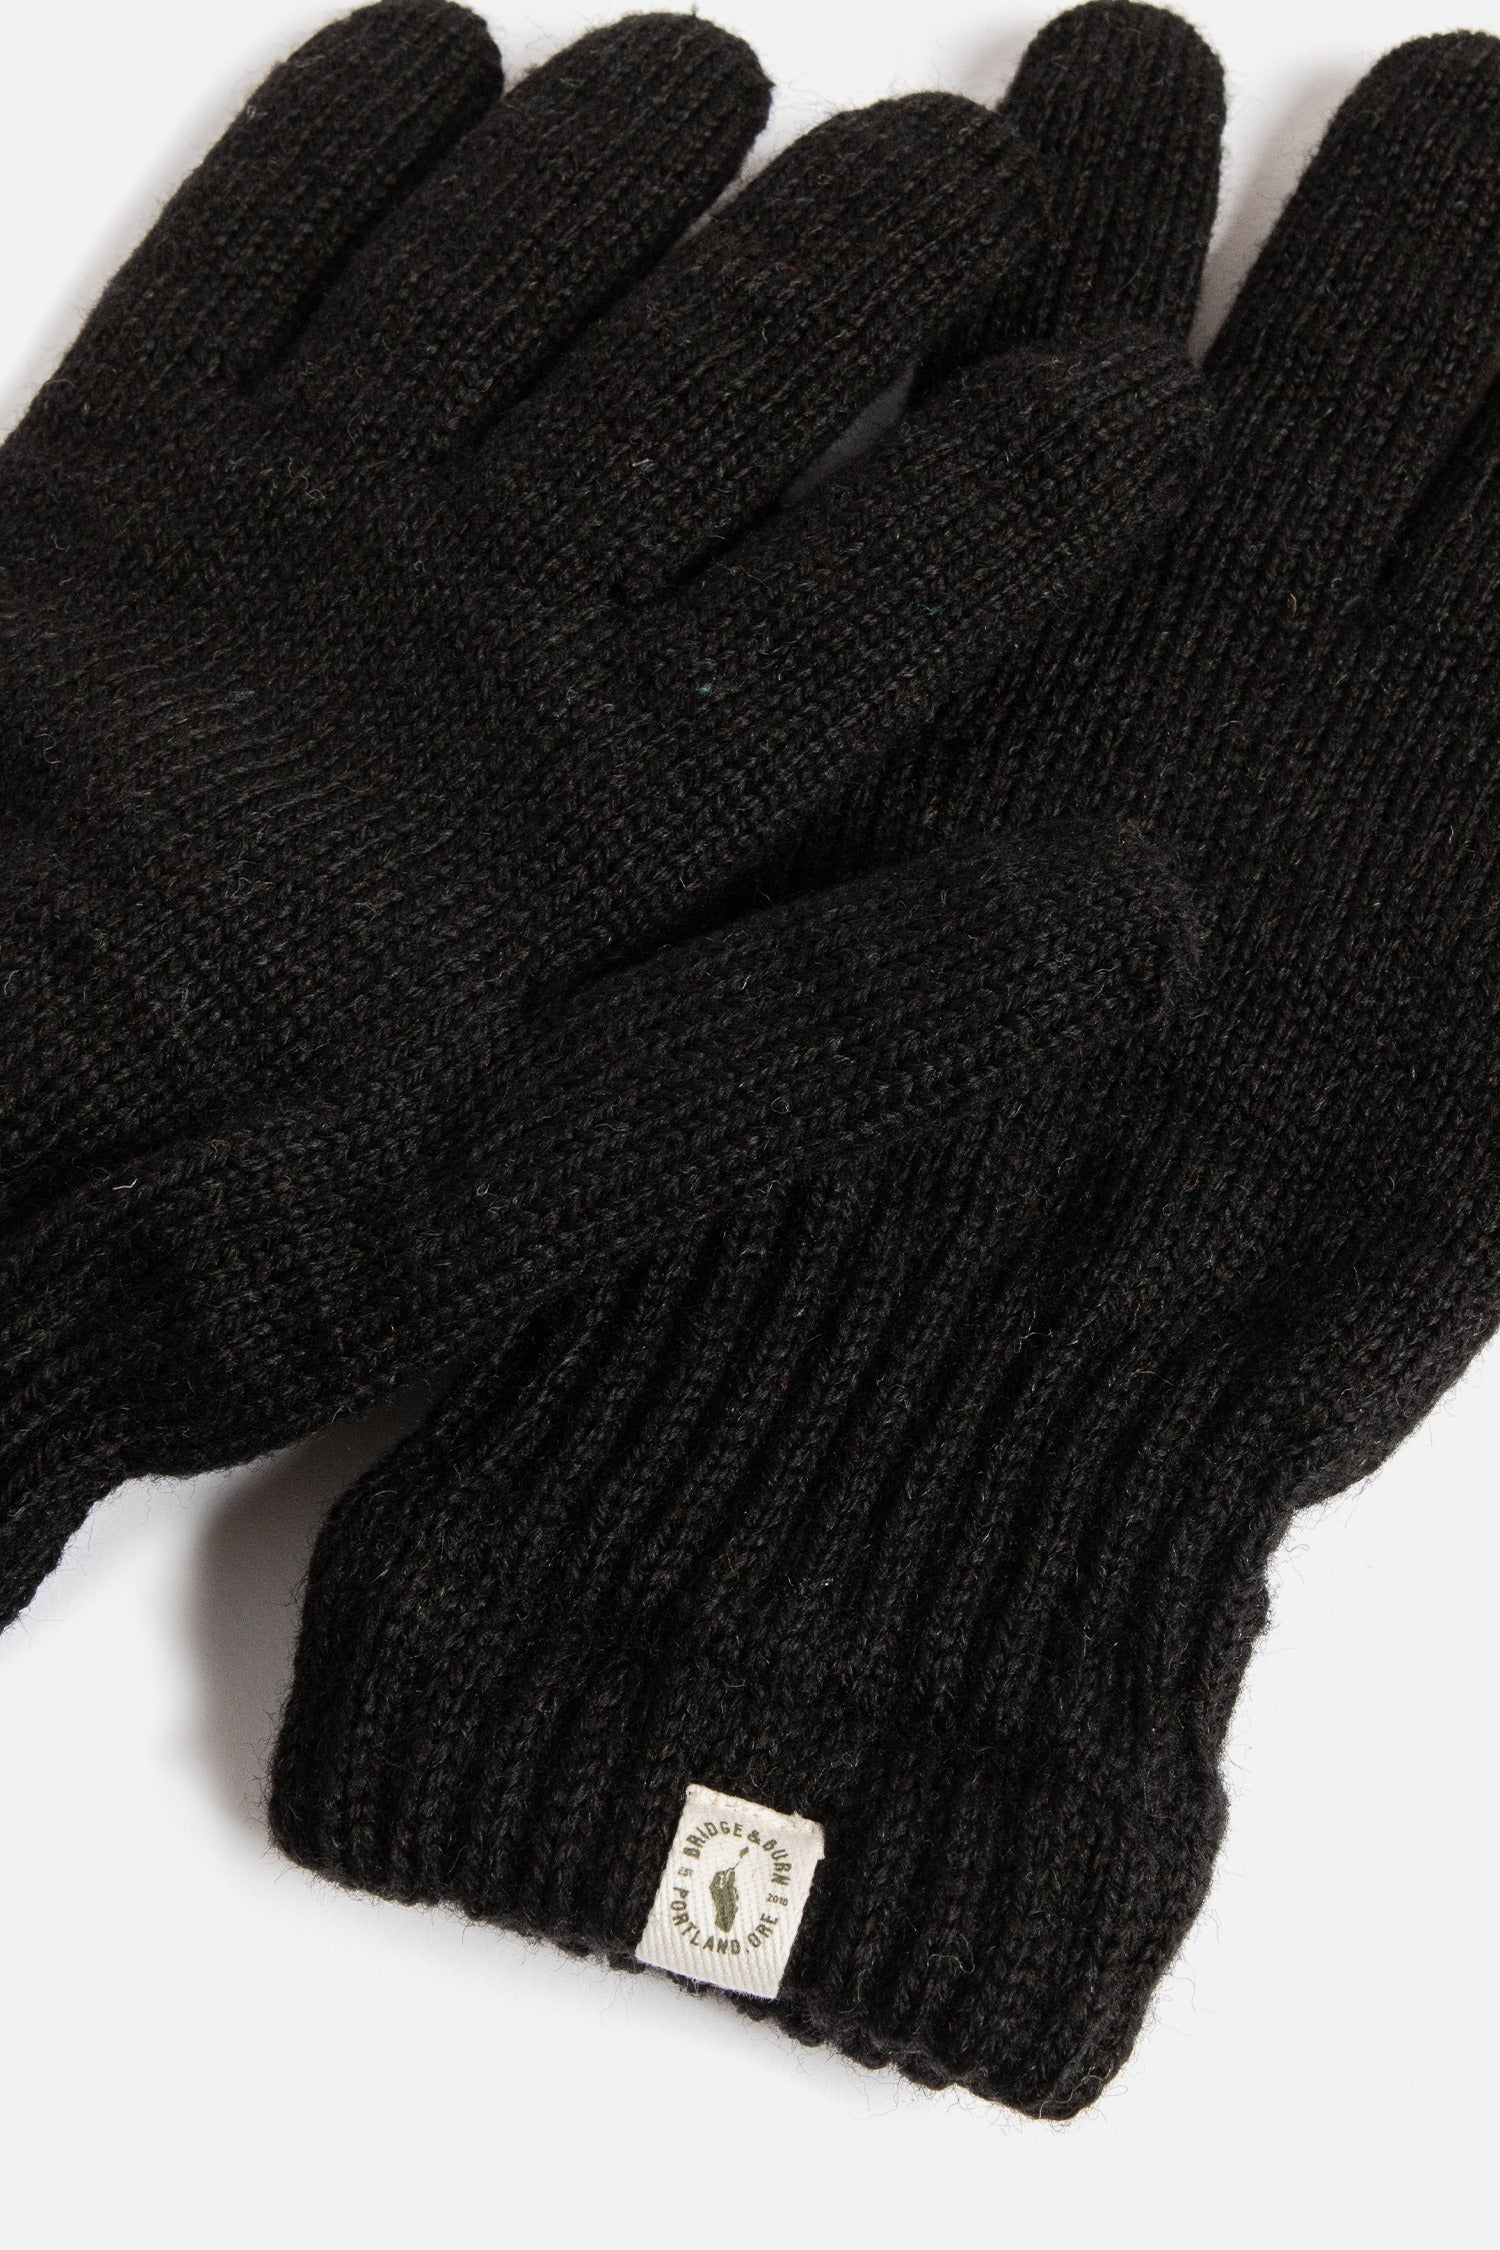 Ragg Wool Lined Glove / Black